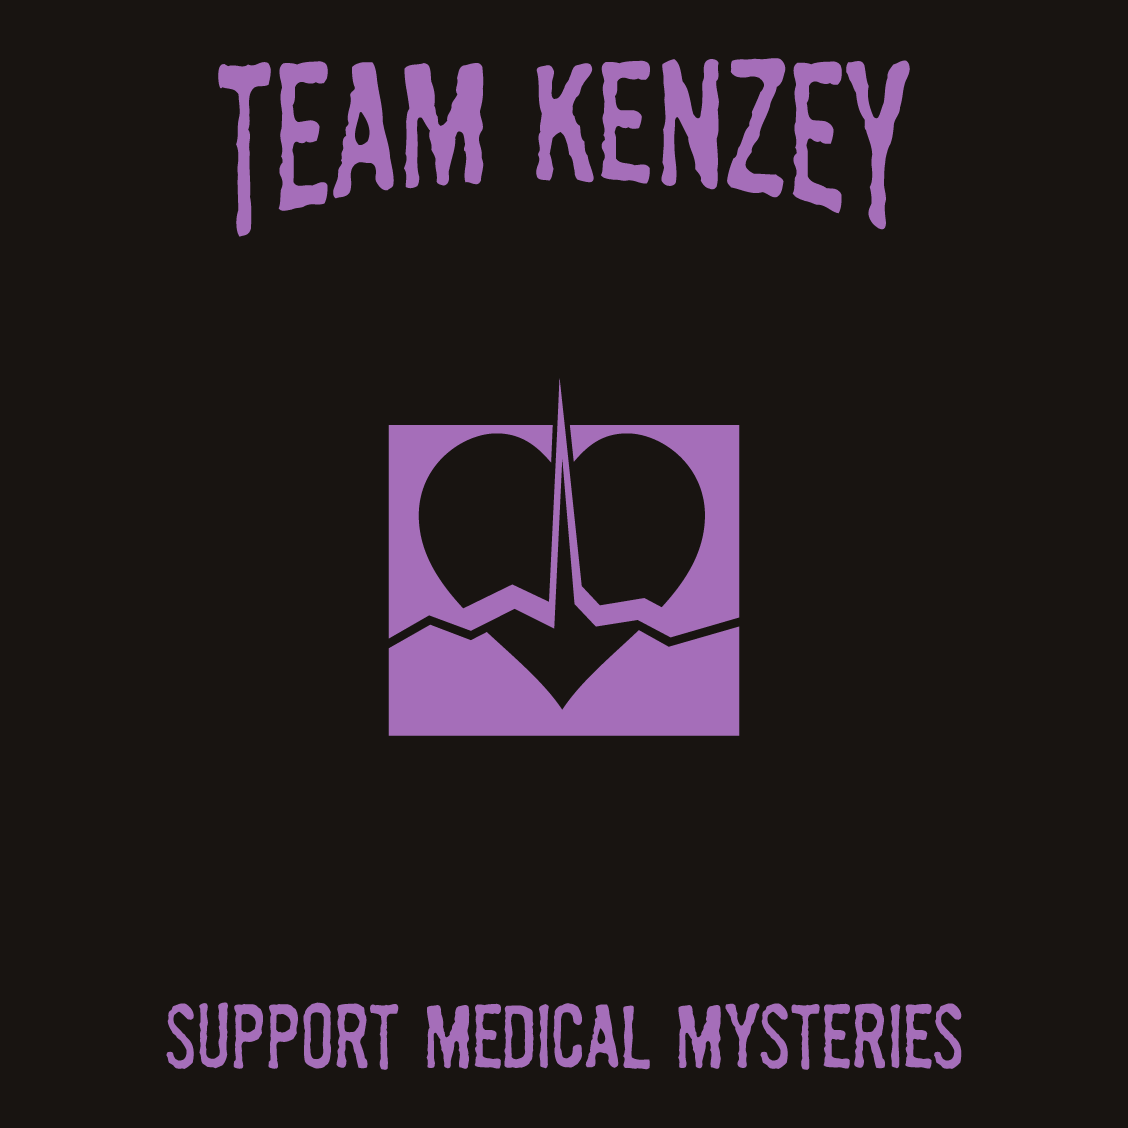 TEAM KENZEY shirt design - zoomed